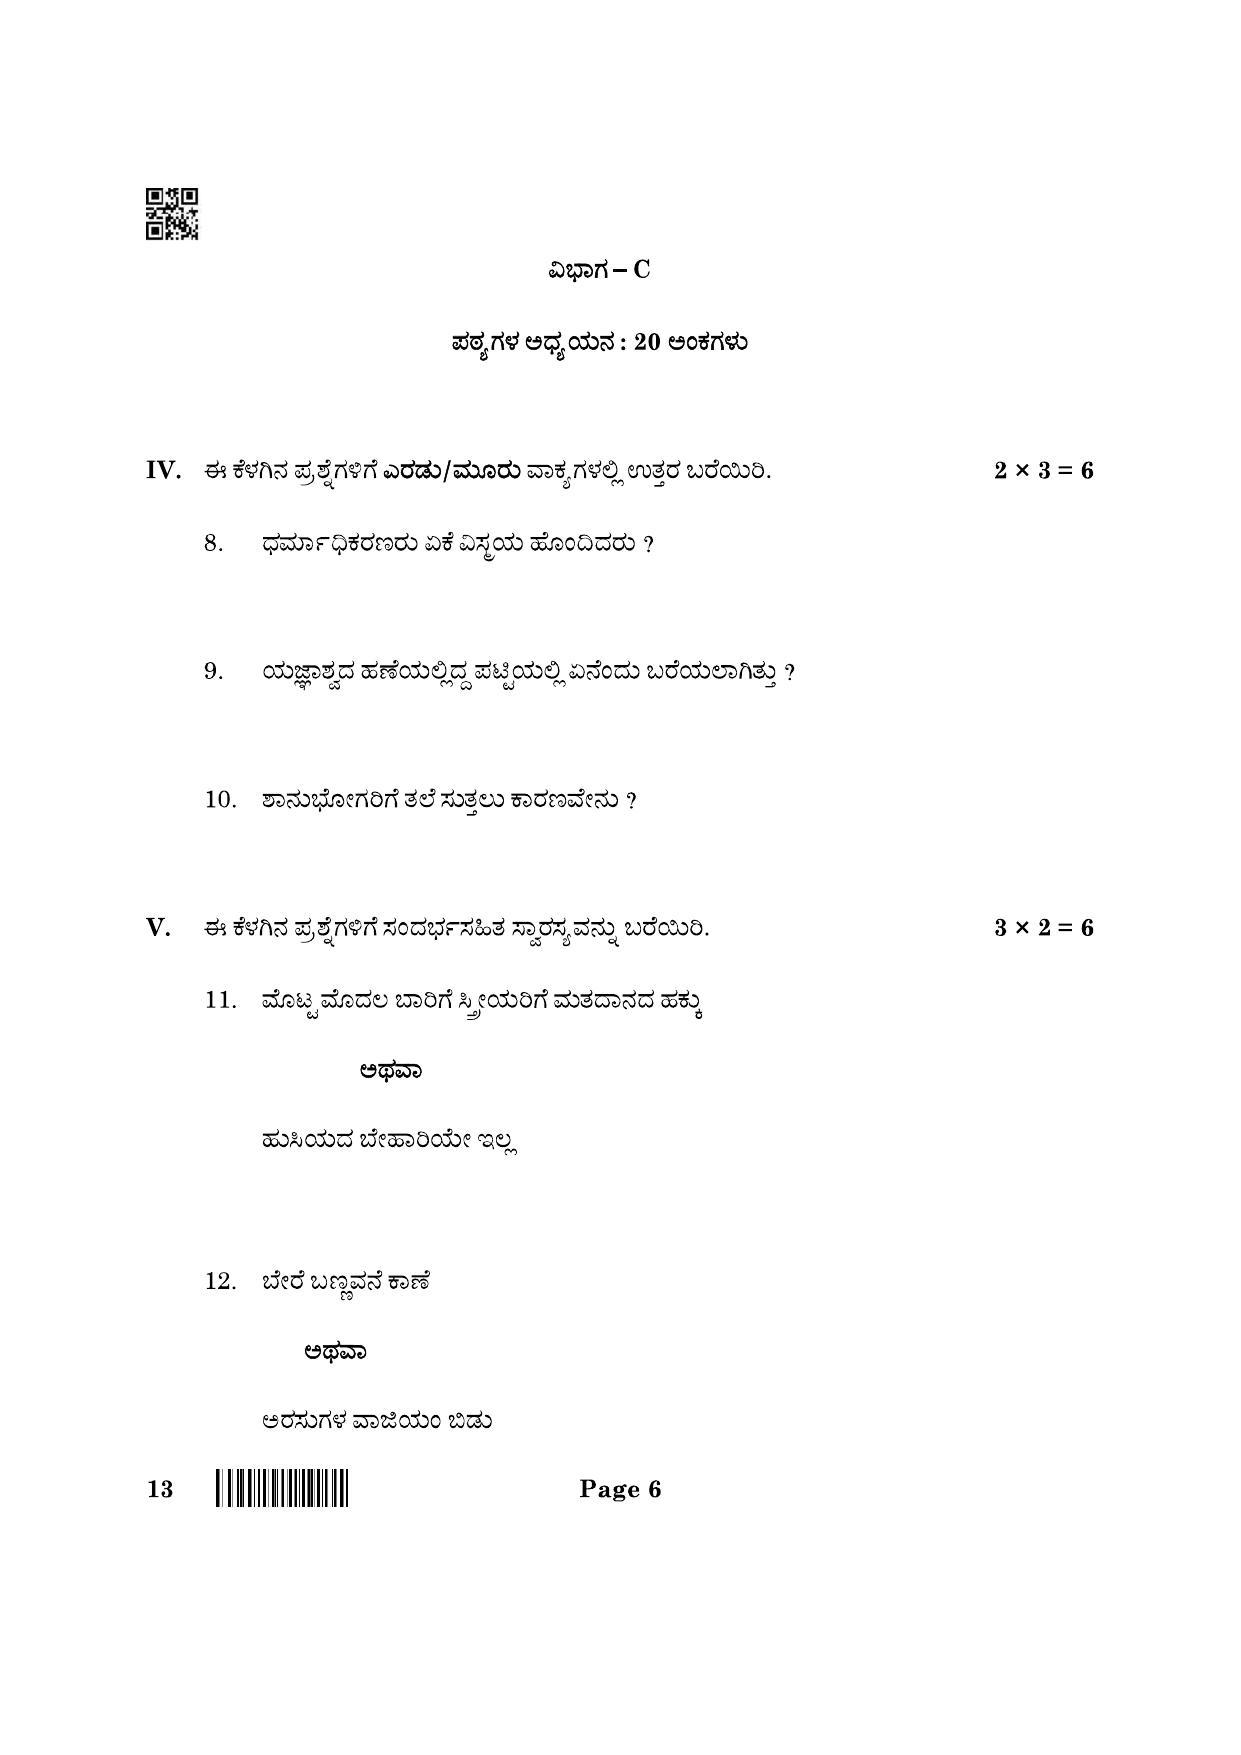 CBSE Class 10 13 Kannada 2022 Question Paper - Page 6